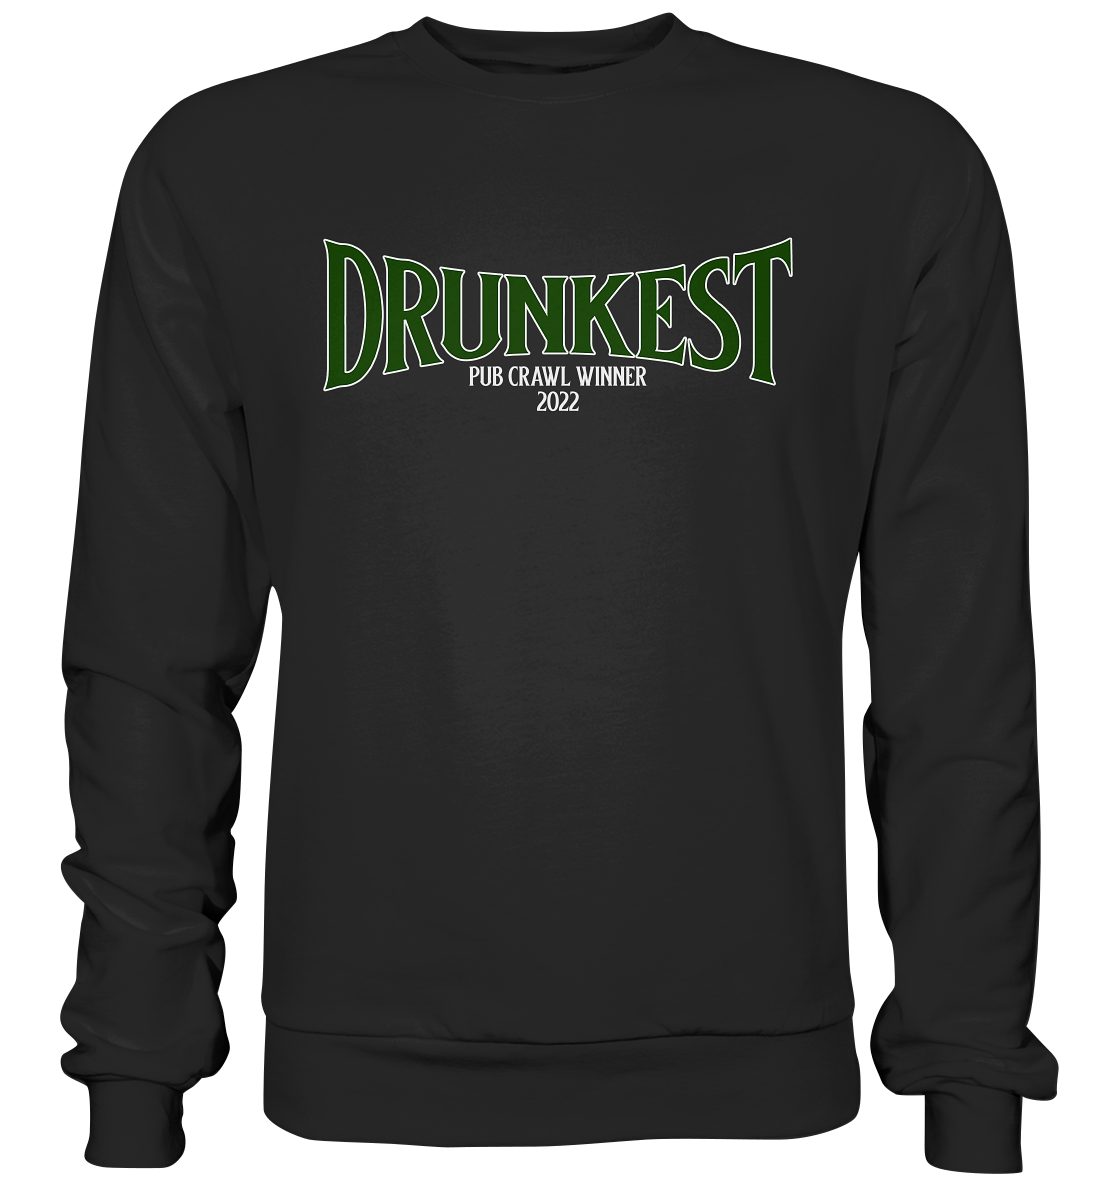 Drunkest "Pub Crawl Winner 2022" - Basic Sweatshirt